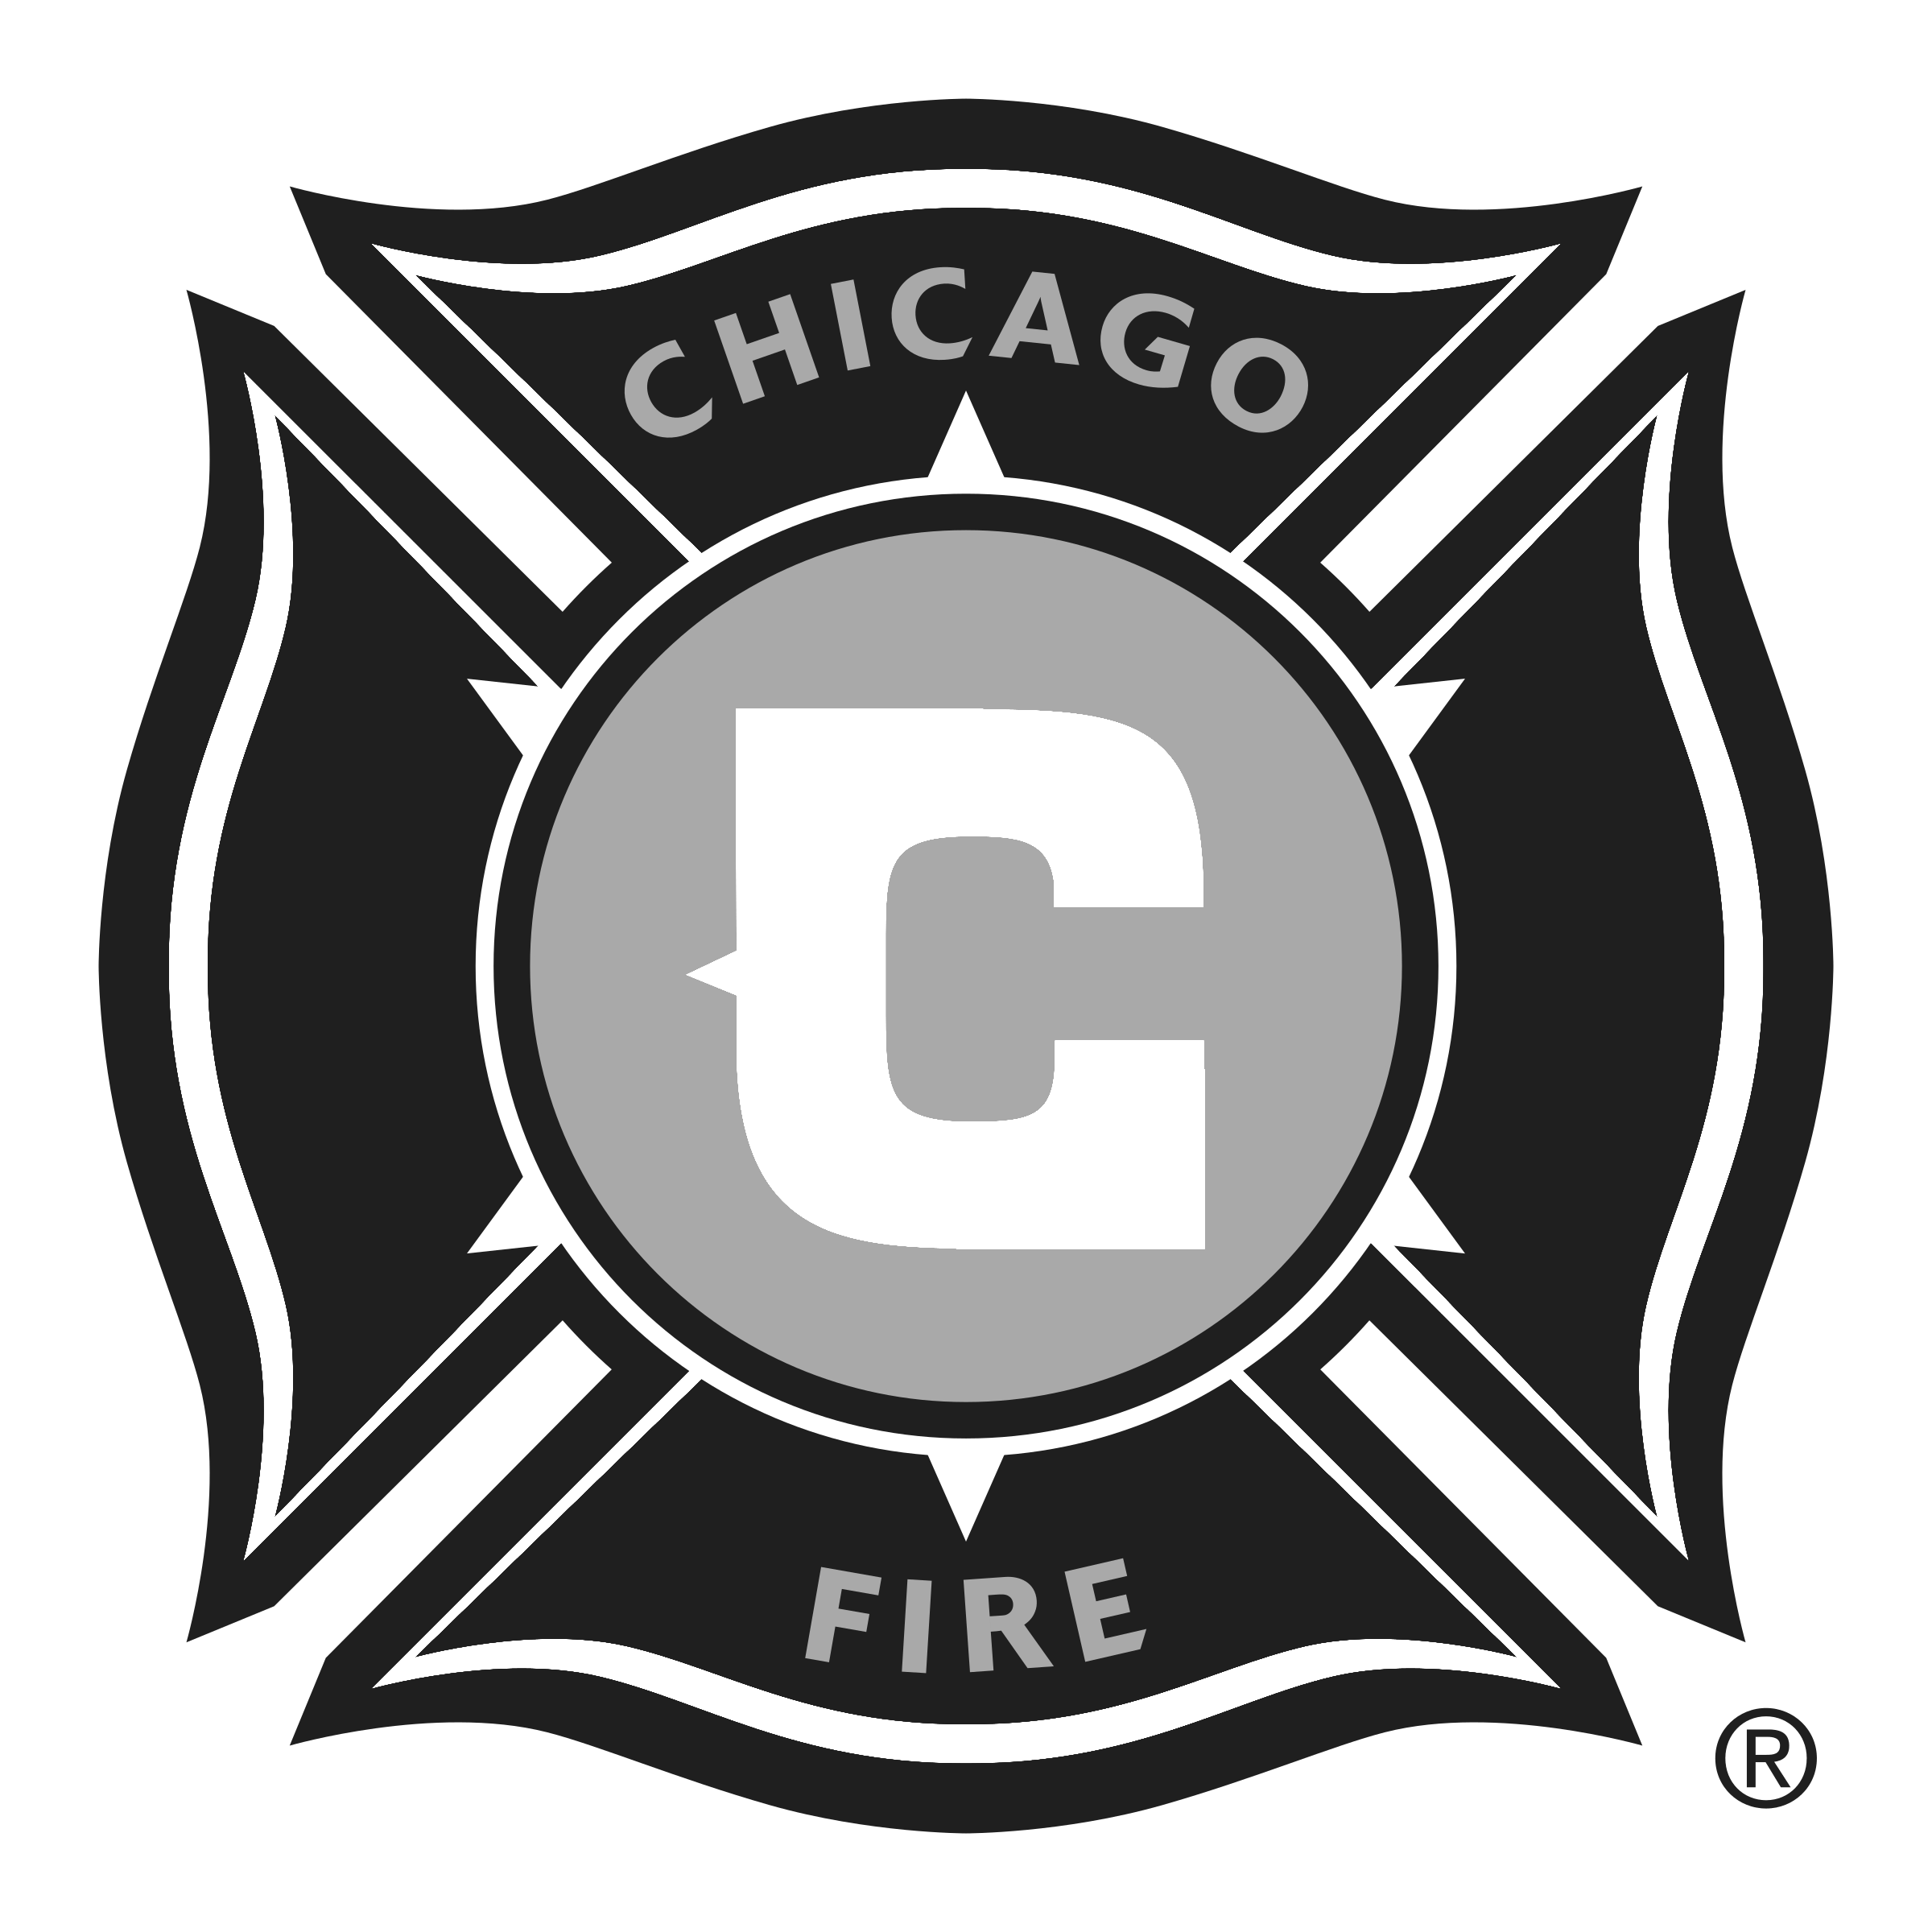 Black and White Soccer Club Logo - Chicago Fire Soccer Club Logo PNG Transparent & SVG Vector - Freebie ...